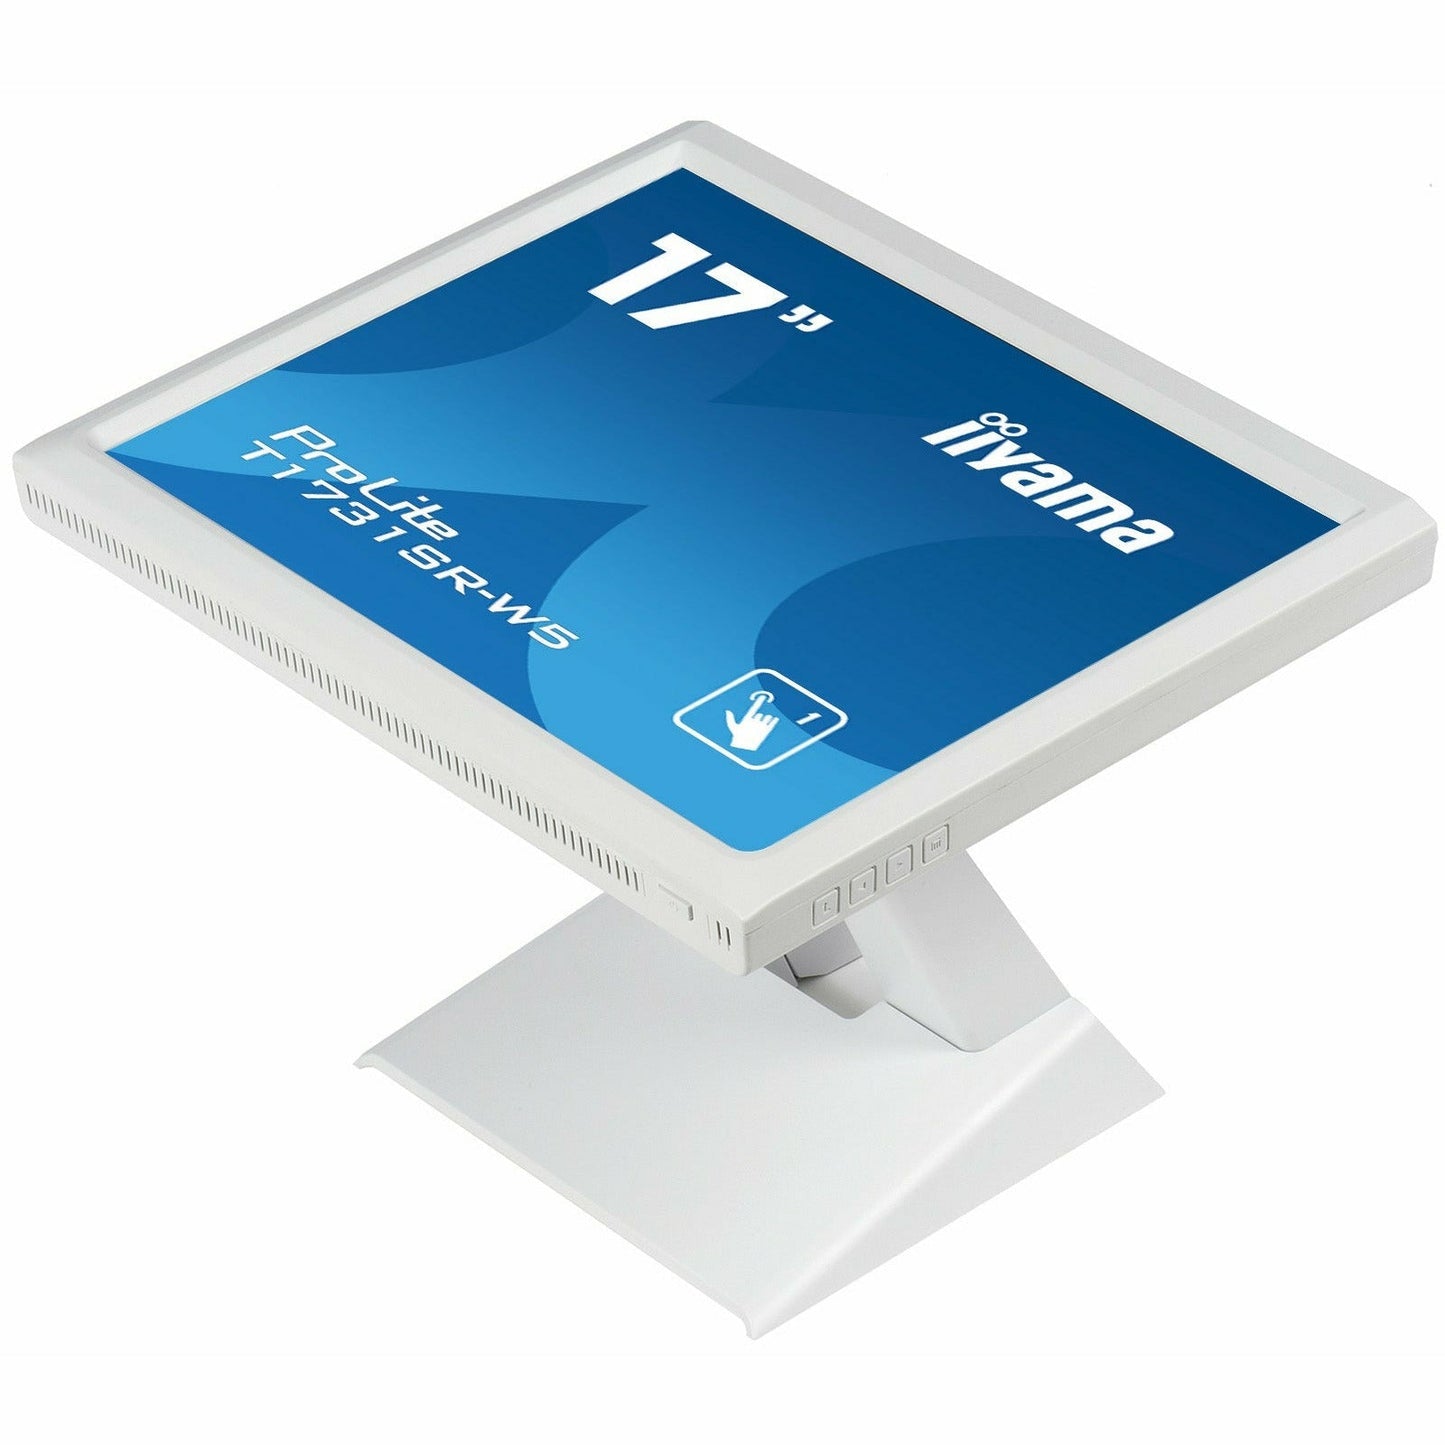 Light Gray iiyama ProLite T1731SR-W5 17" Touch Screen White Display